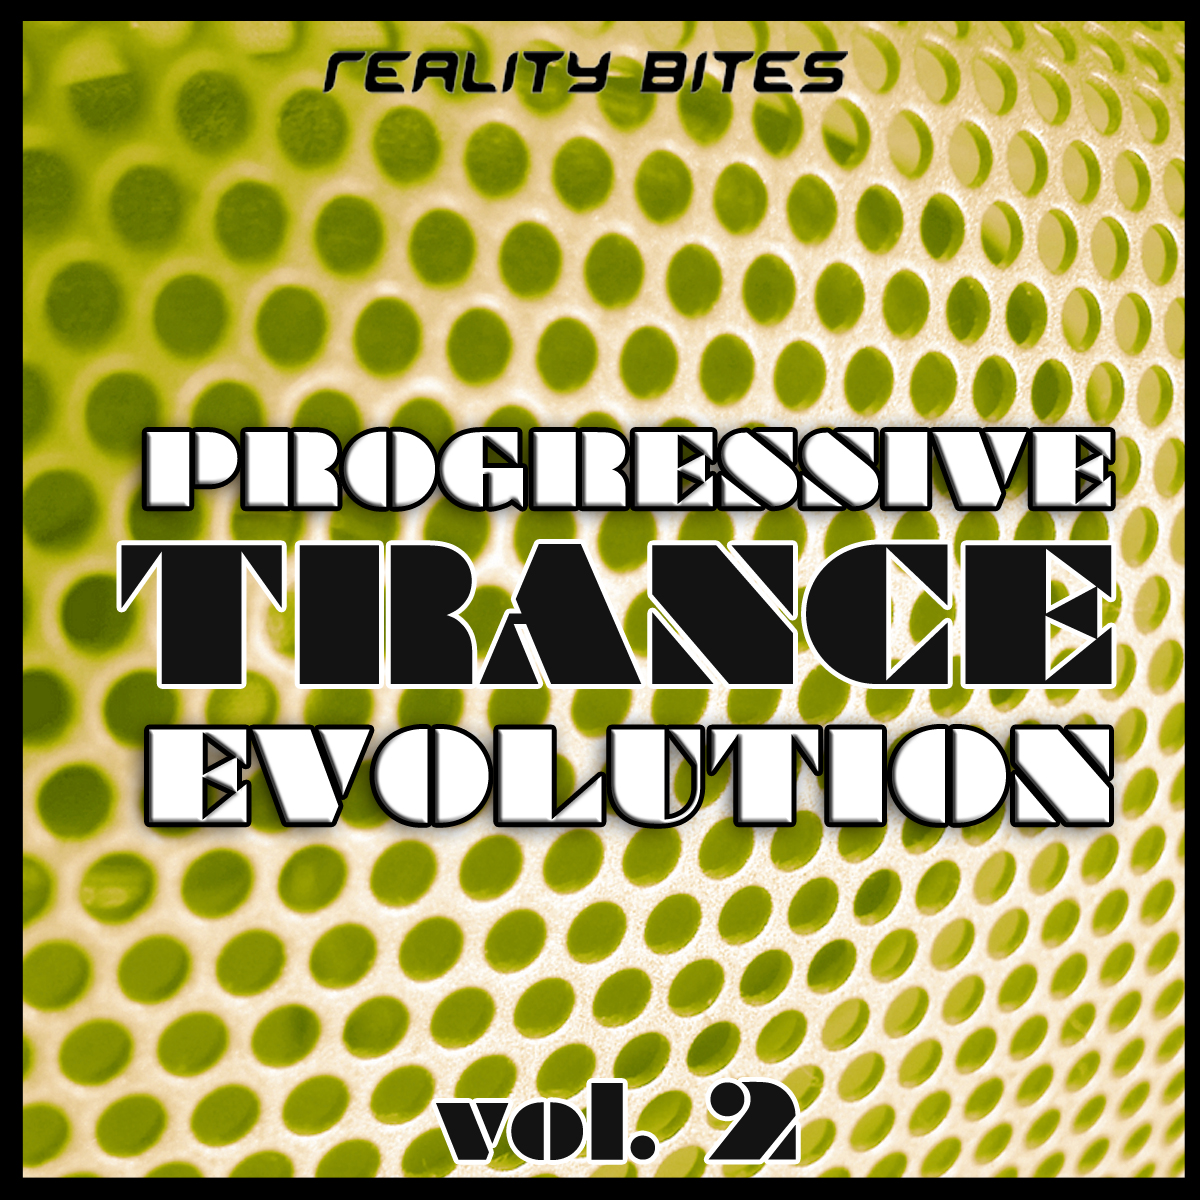 Progressive Trance Evolution Vol. 2